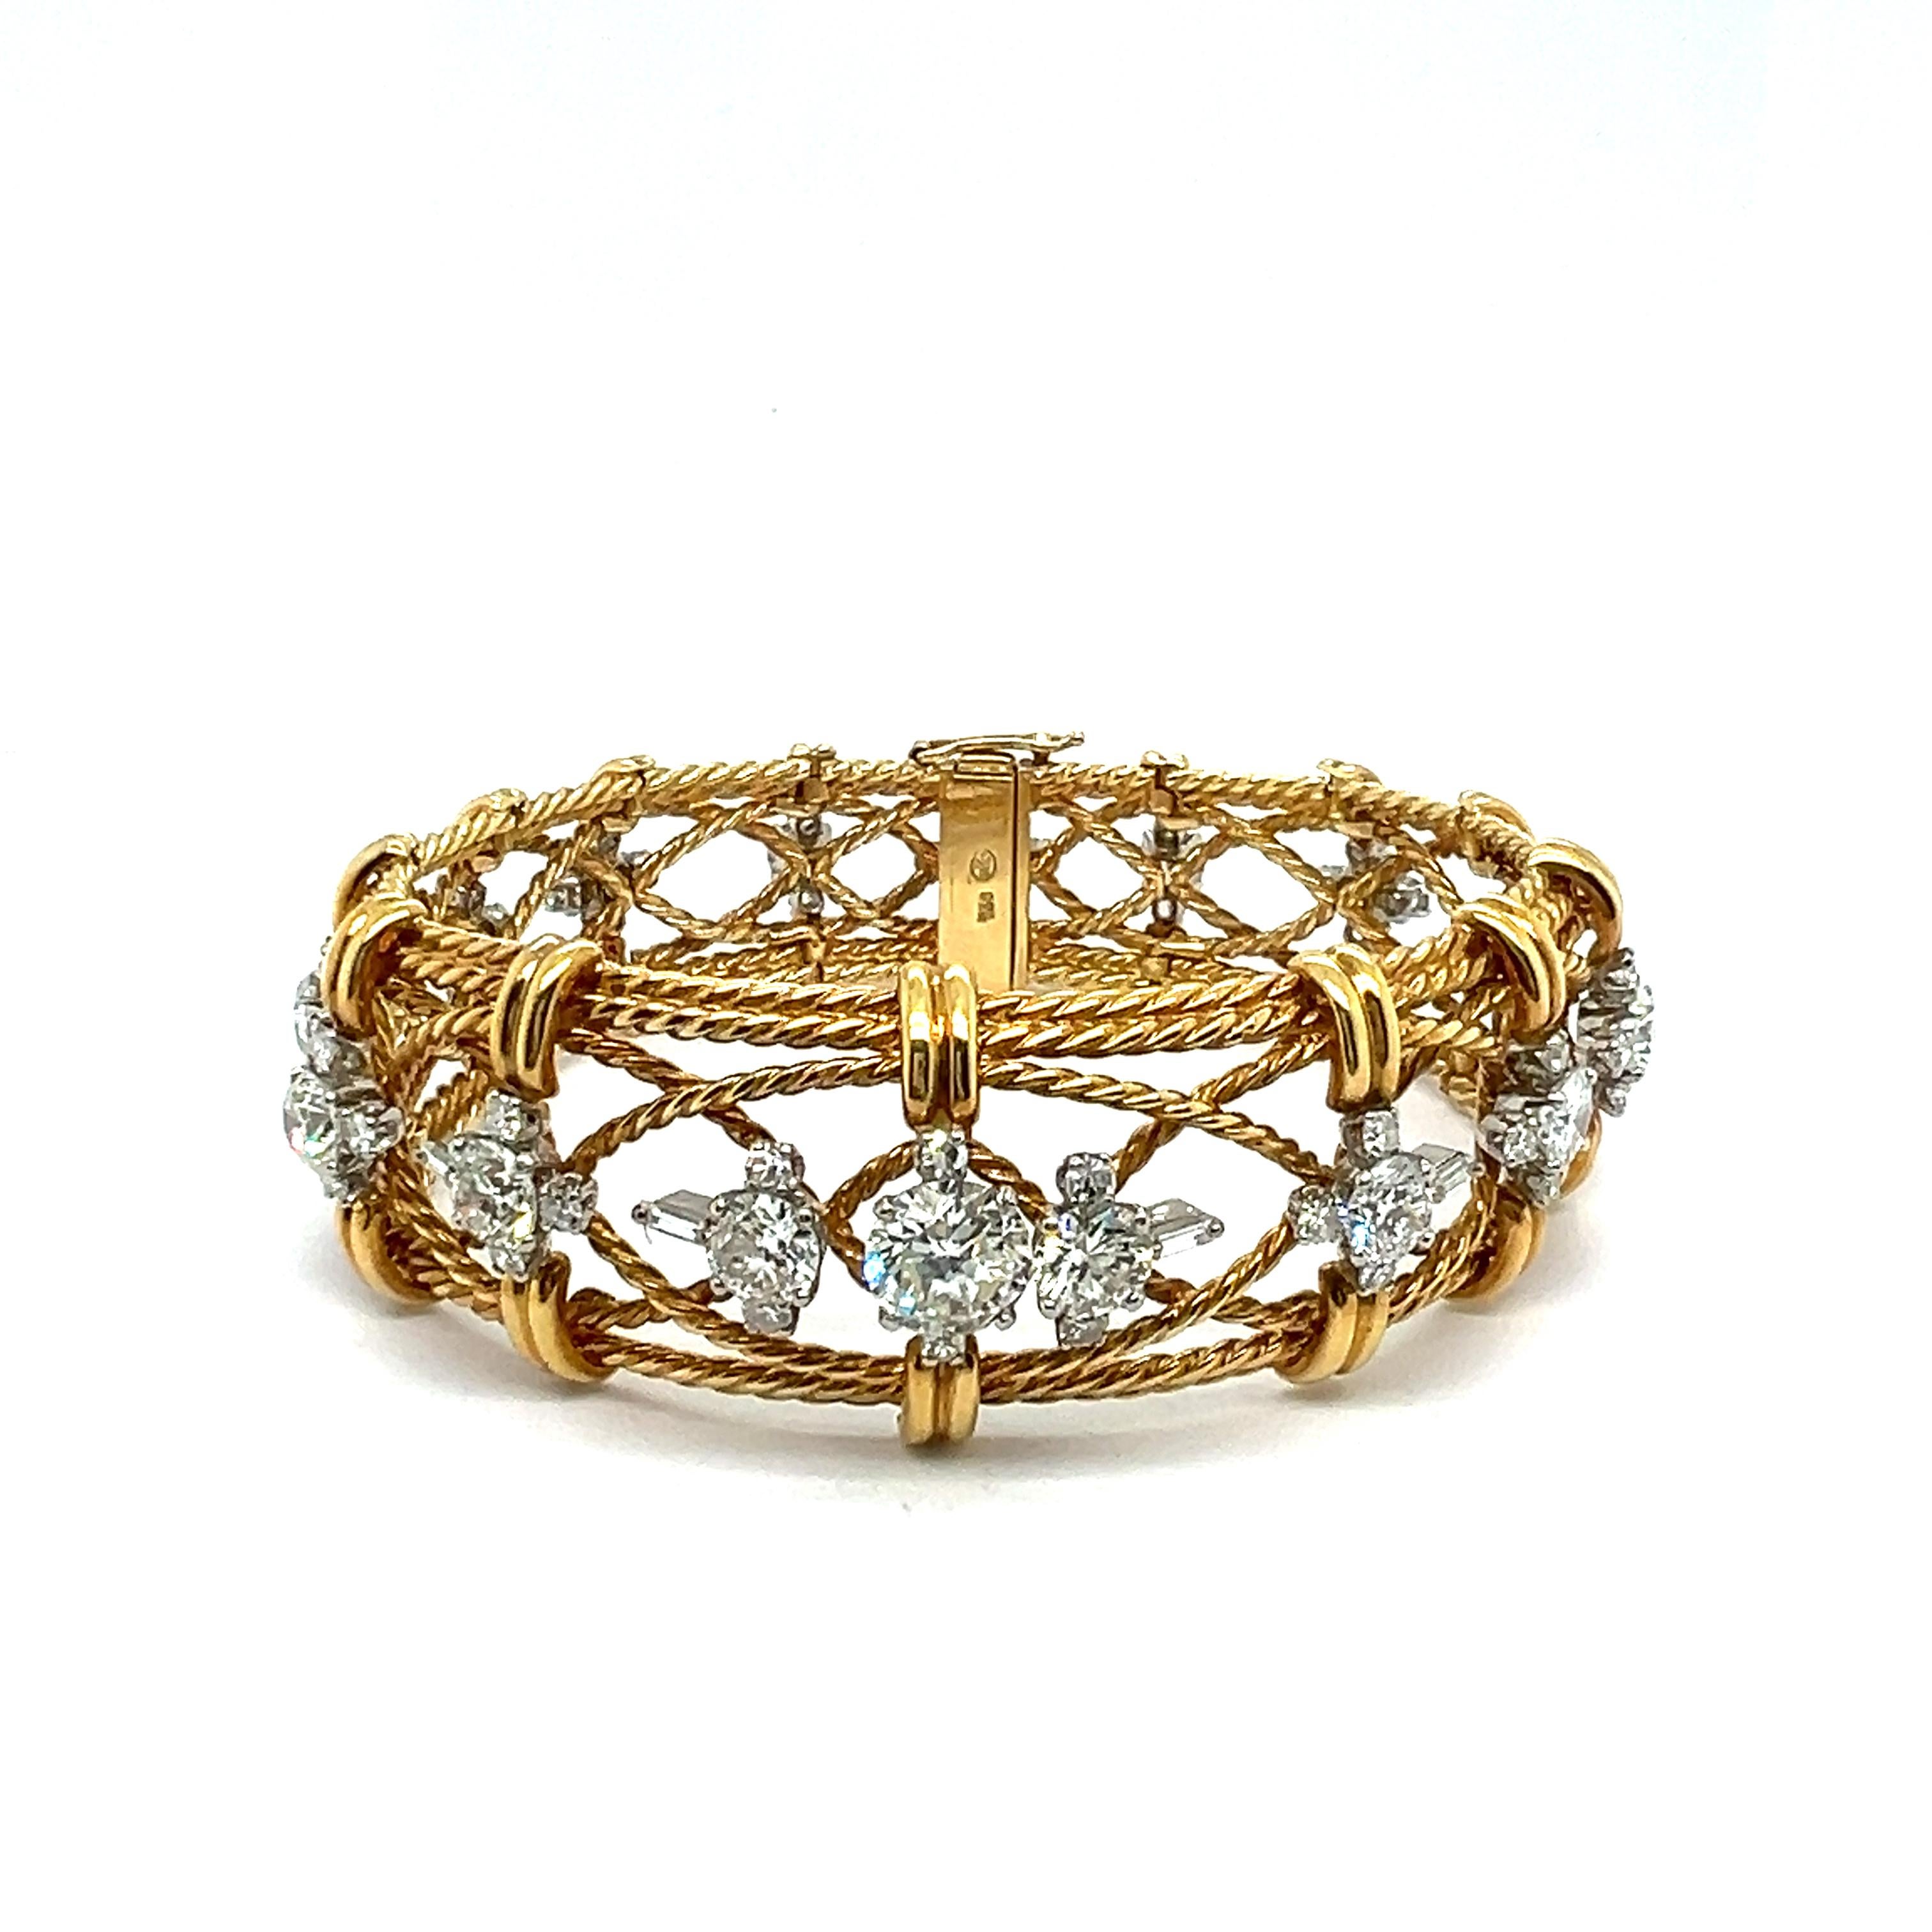 Vintage Bracelet with Diamonds in 18 Karat Gold by Gübelin For Sale 6